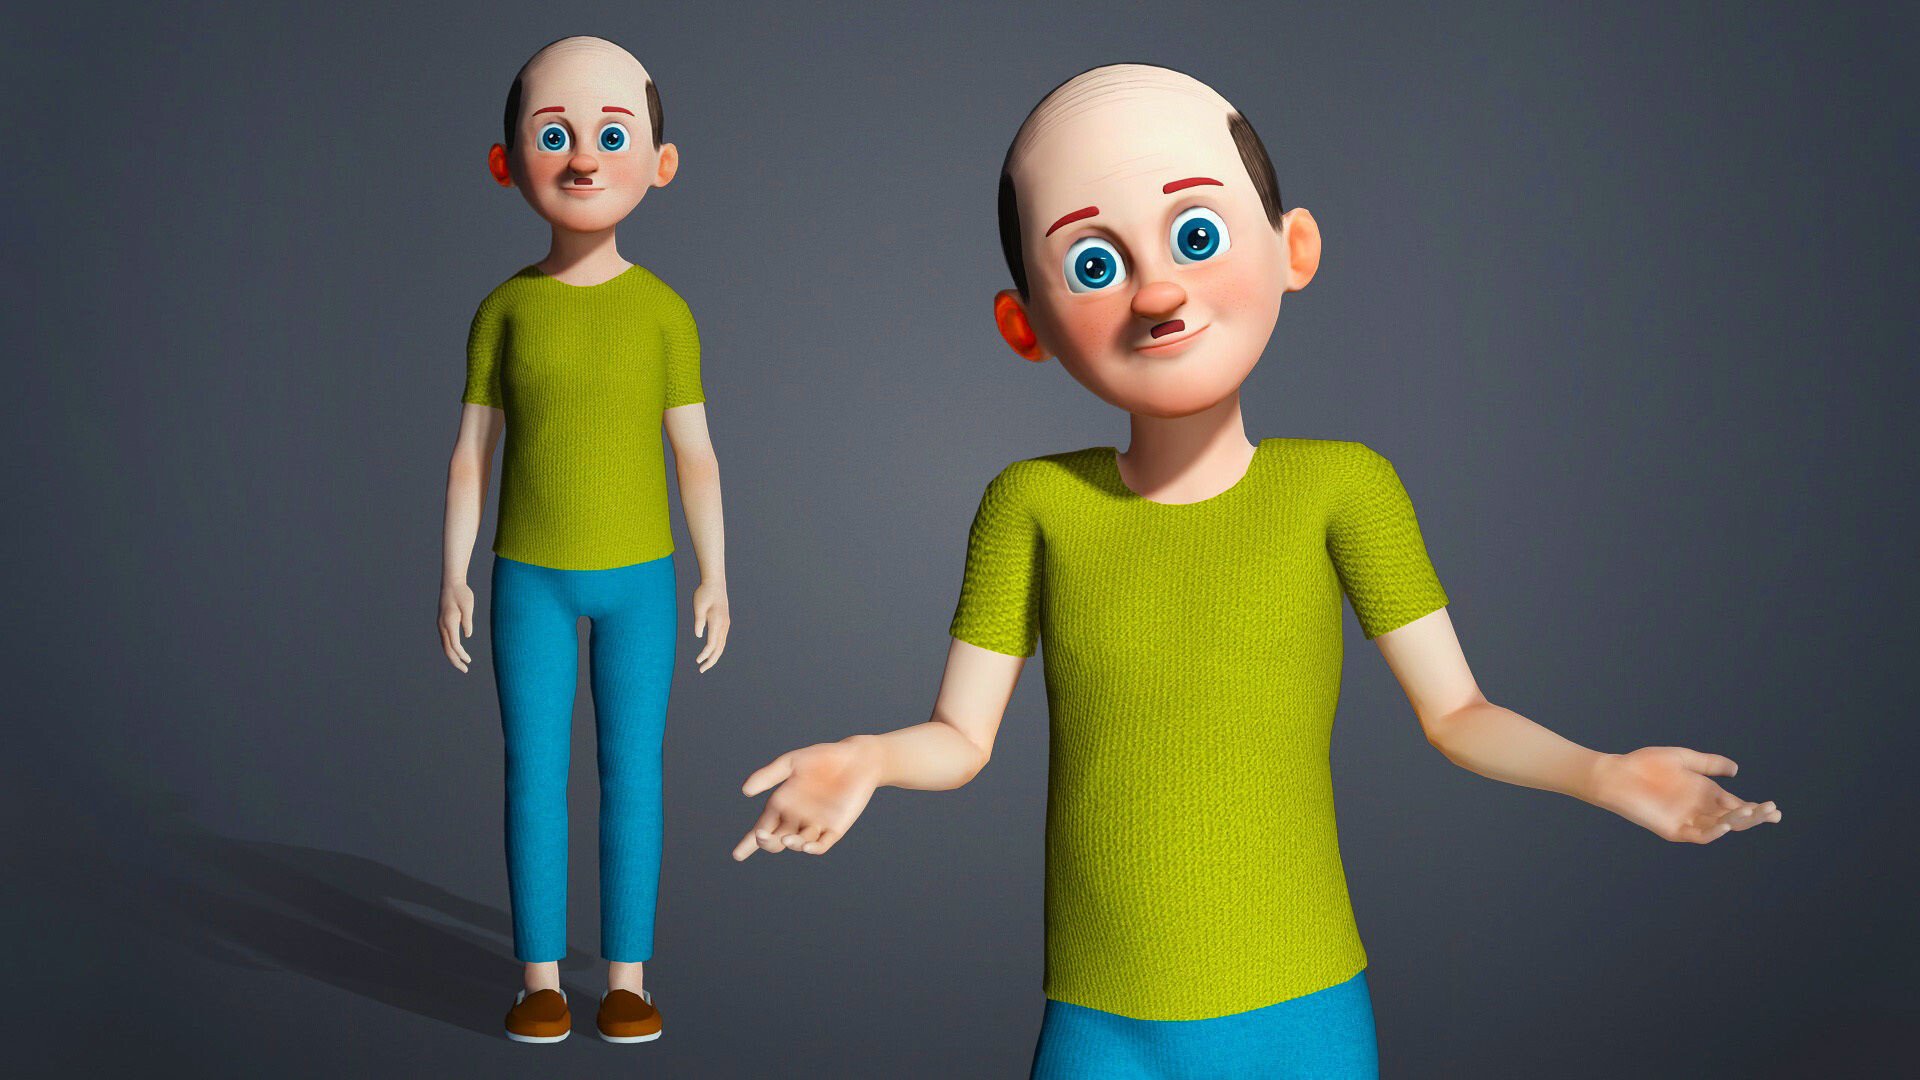 ArtStation - 3D Cartoon Old Man Rigged Character Model